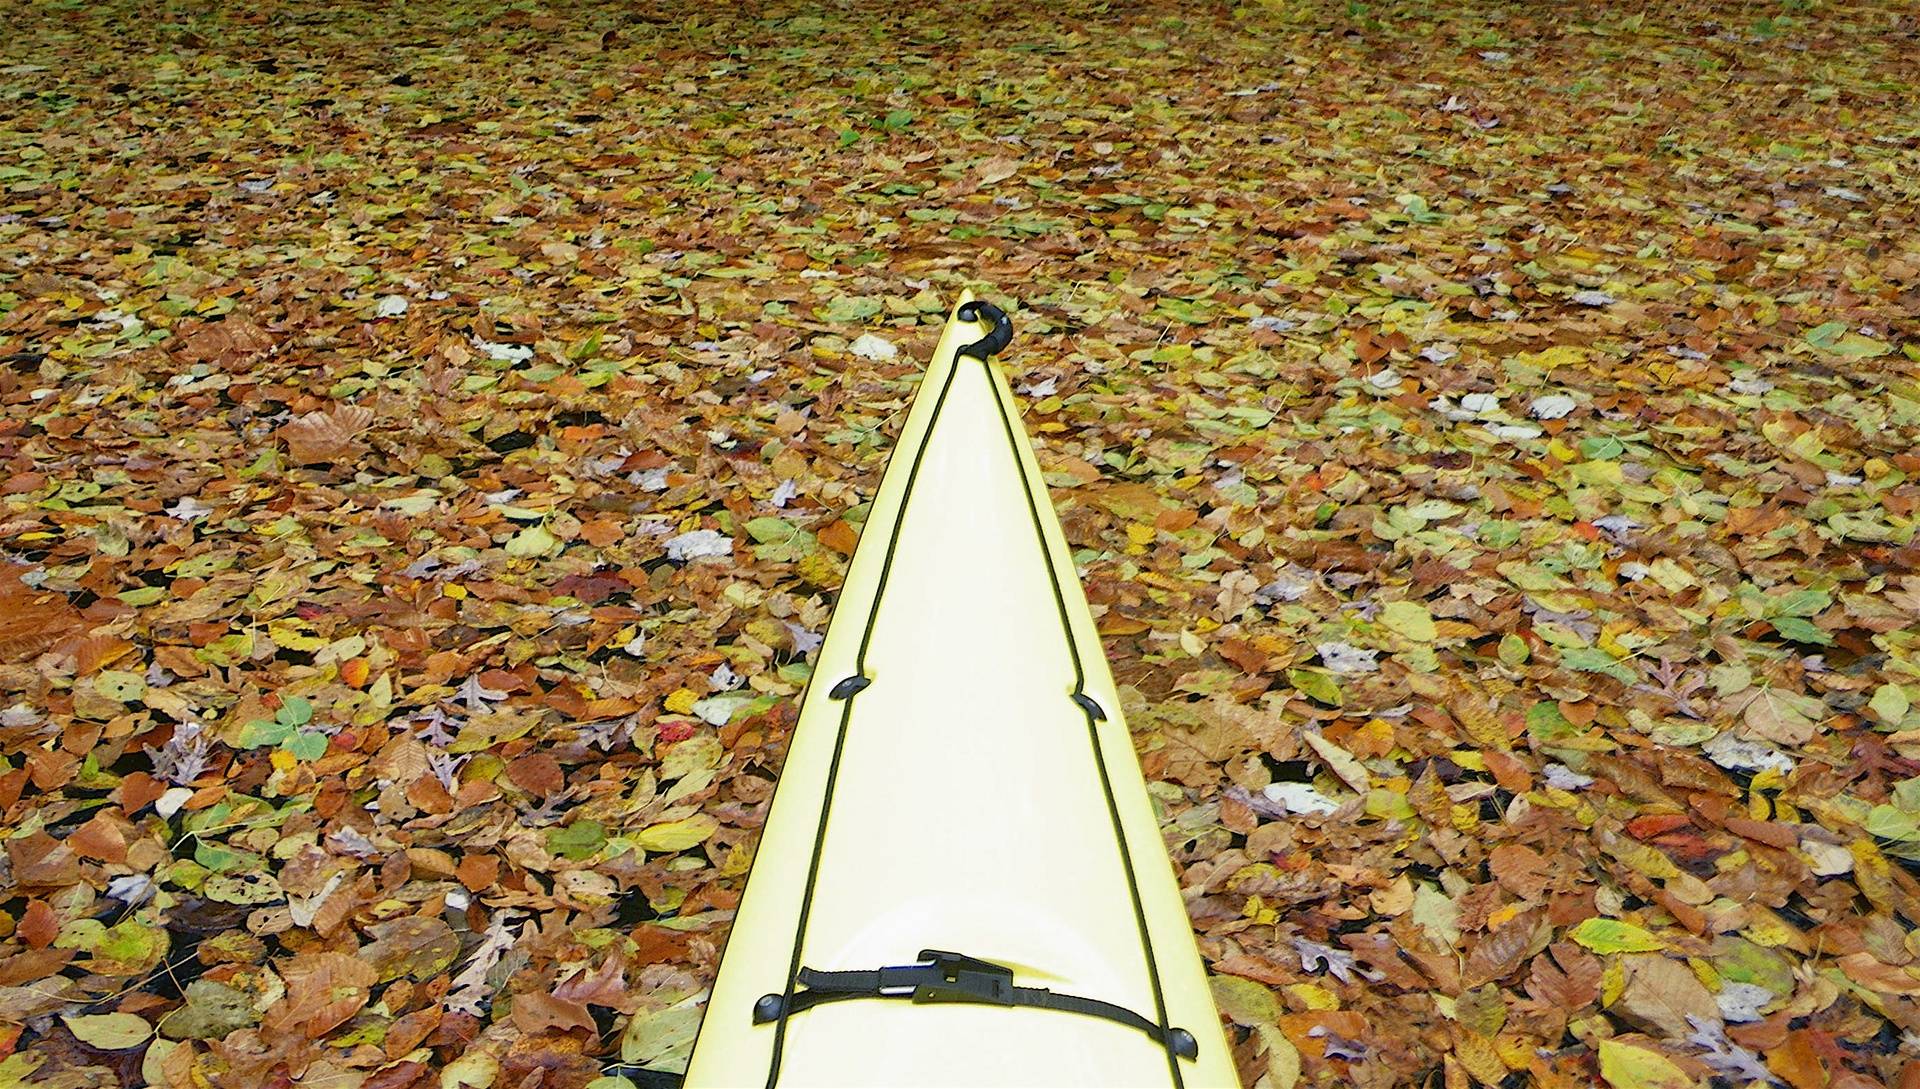 Paddling through leaves - Occoquan Creek